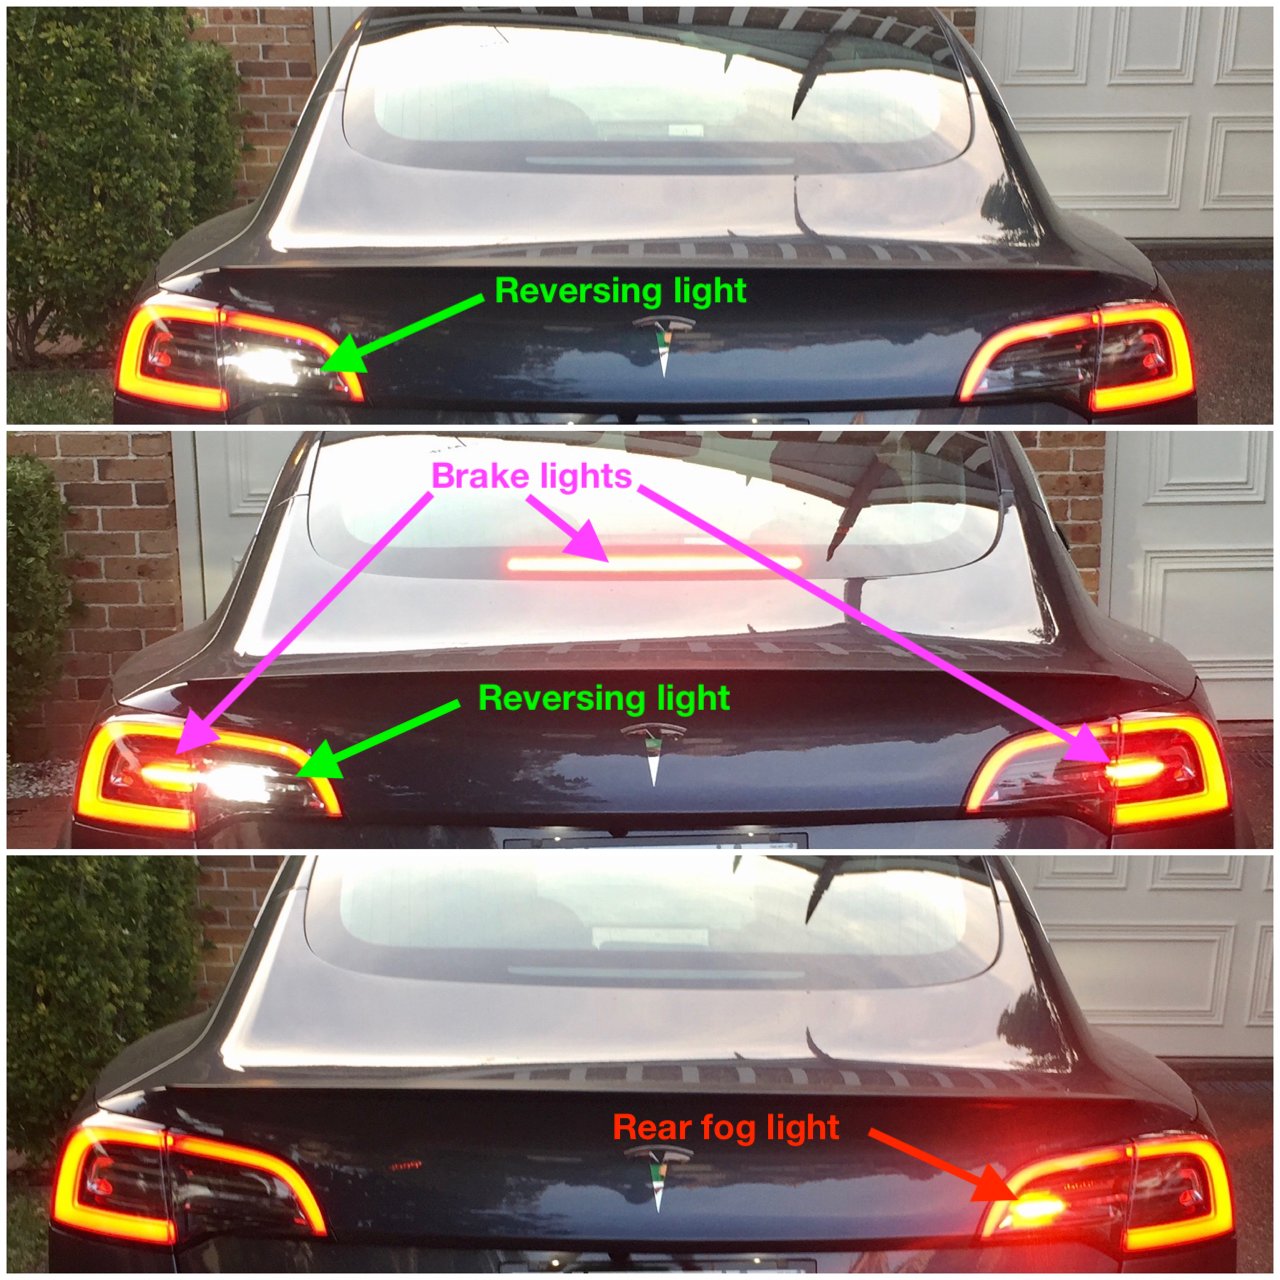 Reversing and rear lights on the Model 3 | Motors Club